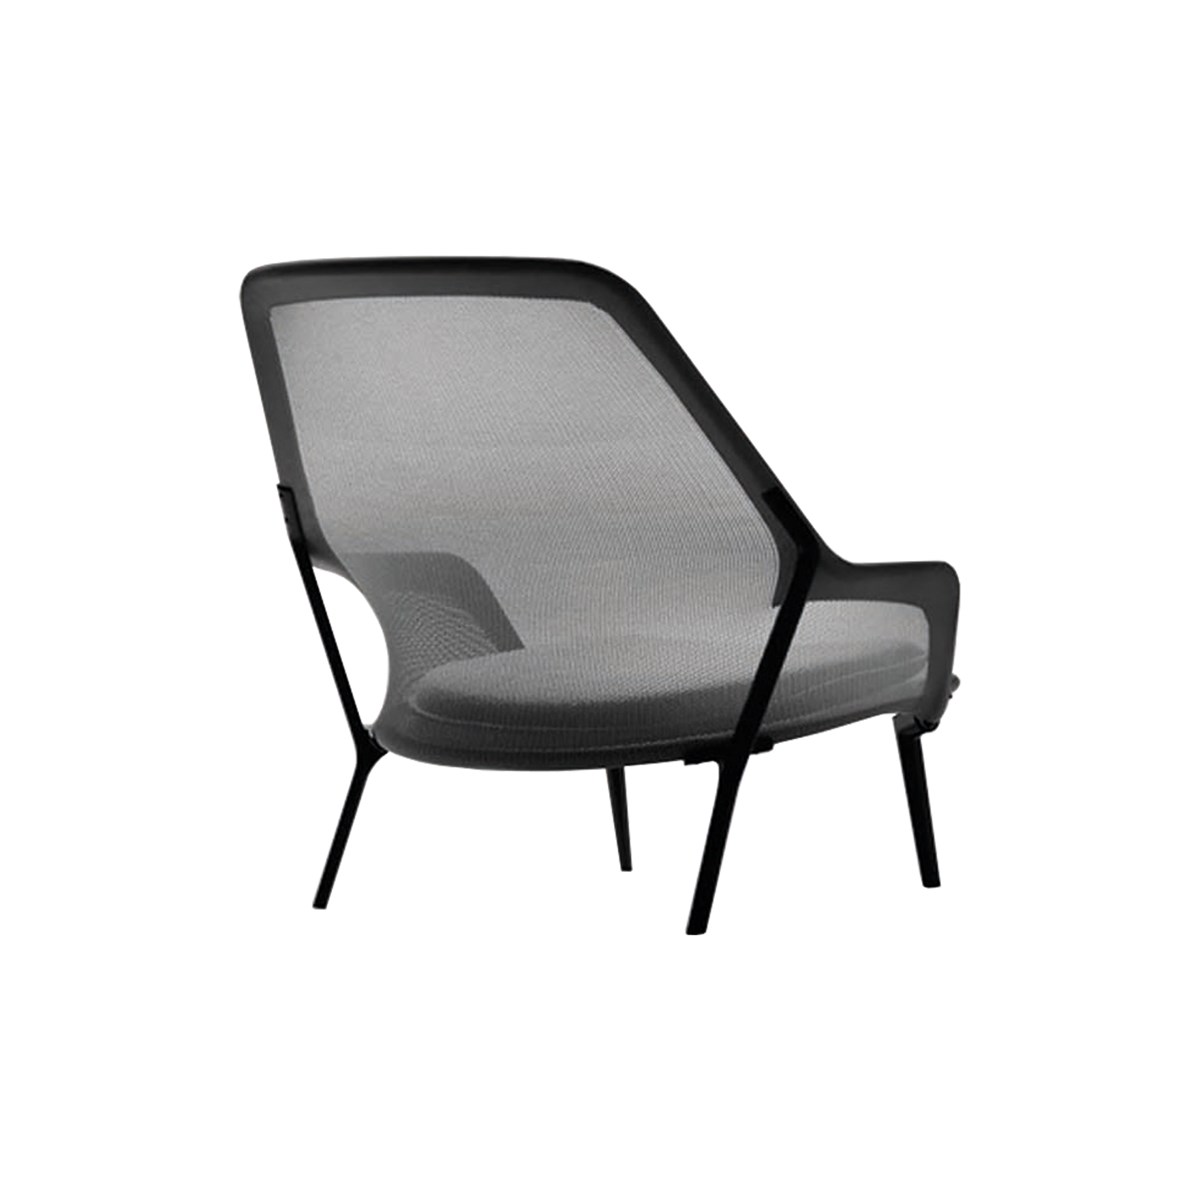 Vitra-Ronan-Erwan-Bouroullec-Slow-Chair-Ottoman-Matisse-2